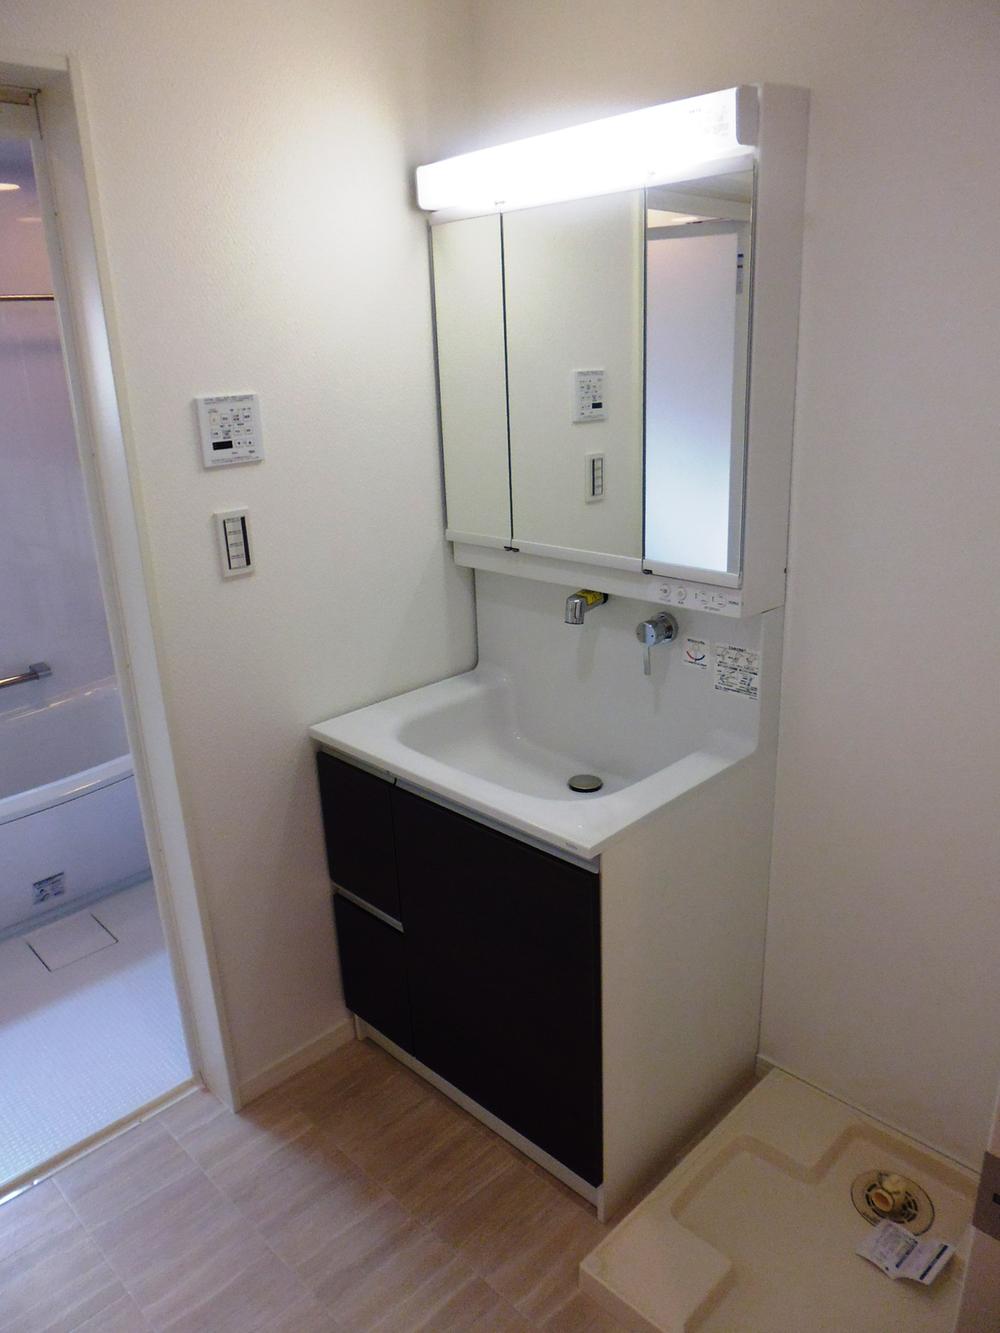 Wash basin, toilet. Three-sided mirror storage type